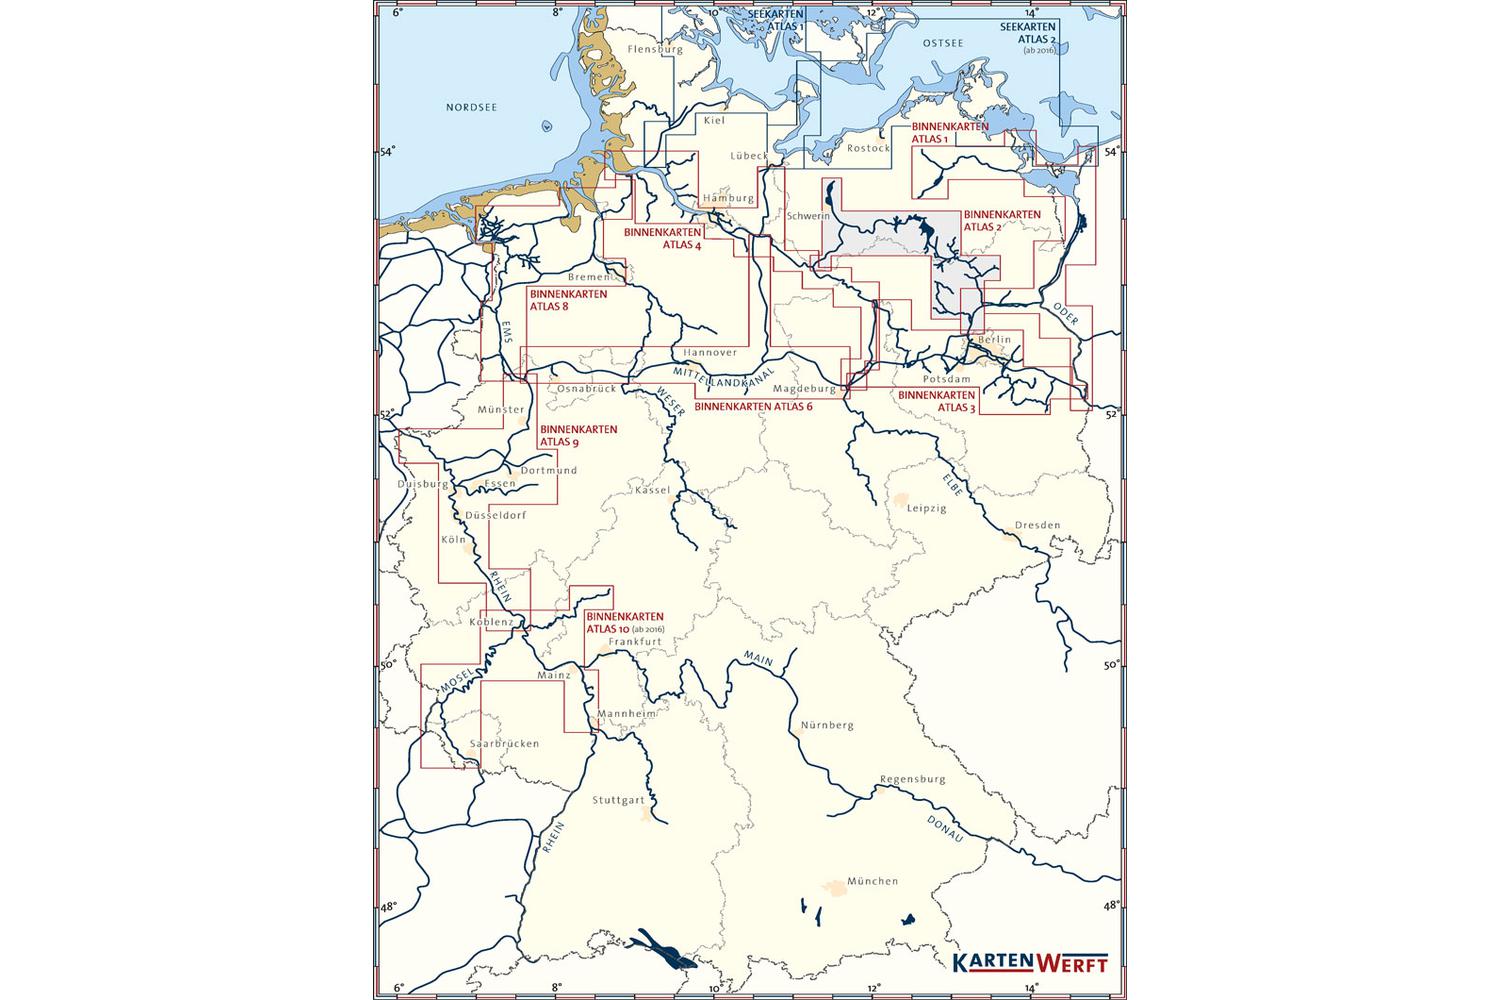 BinnenKarten Atlas 4 Elbe - Hamburg